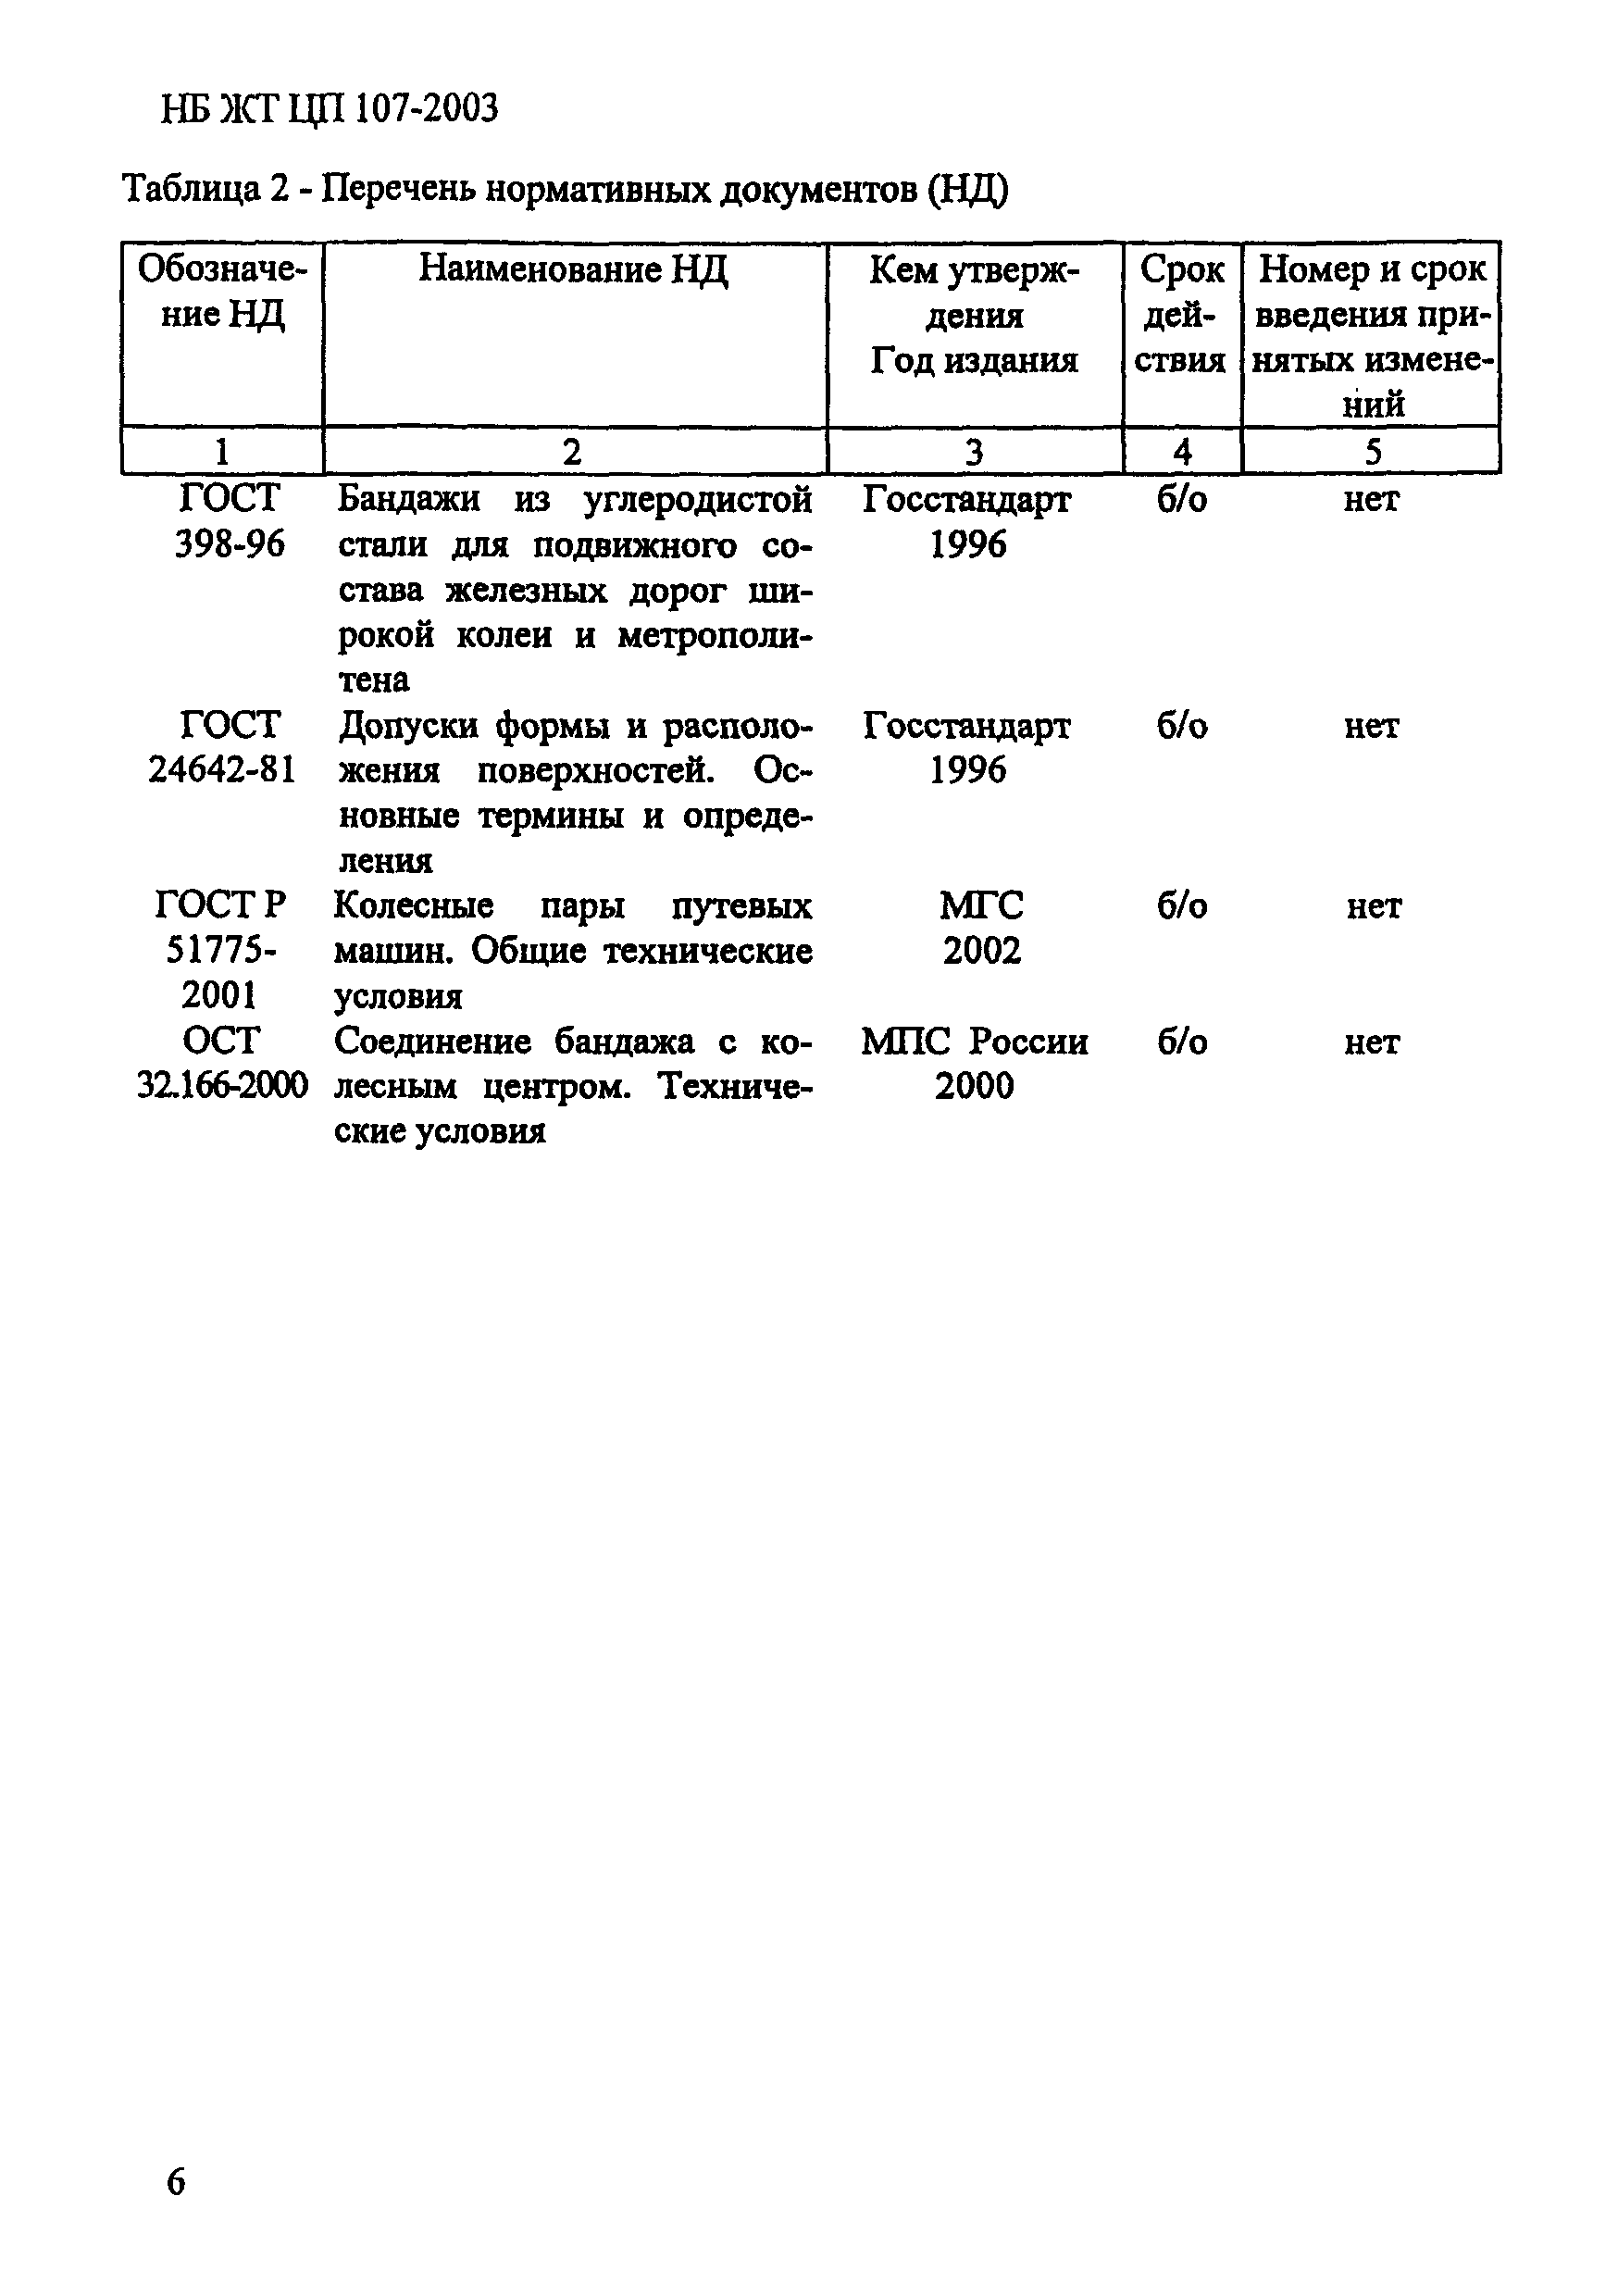 НБ ЖТ ЦП 107-2003